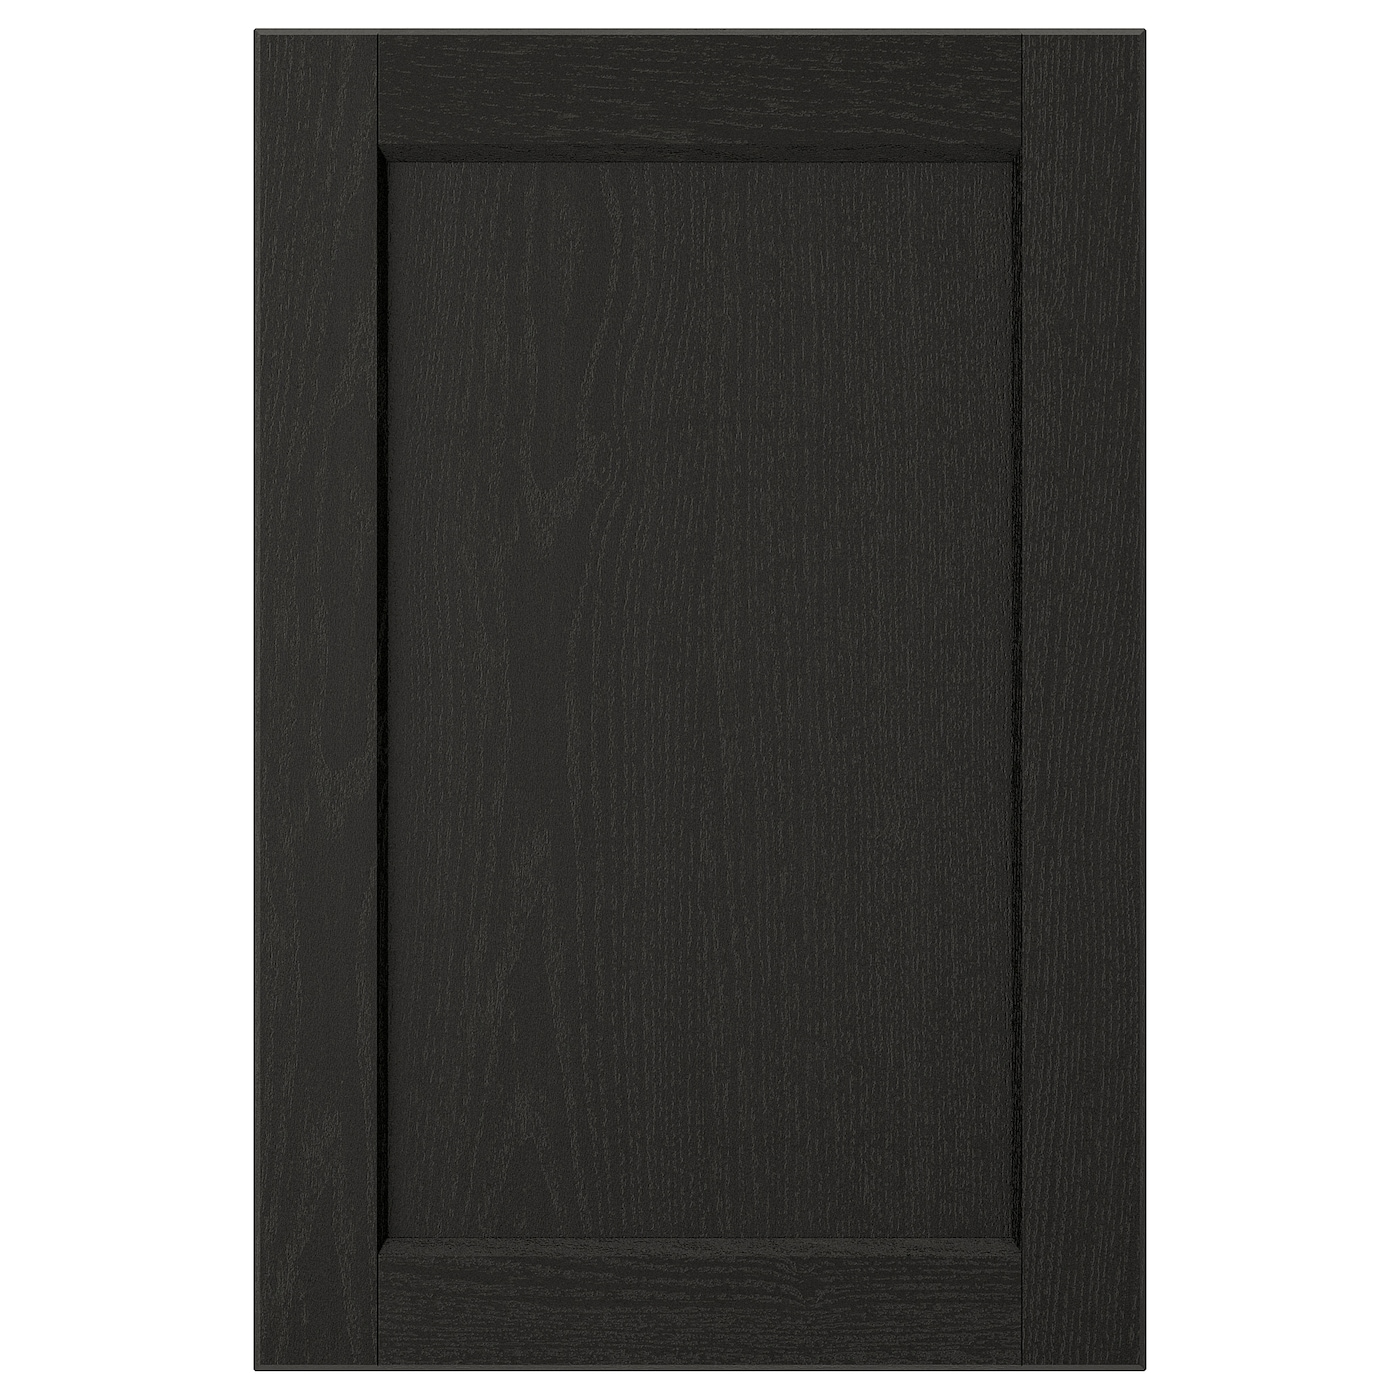 Дверца - IKEA LERHYTTAN, 60х40 см, черный, ЛЕРХЮТТАН ИКЕА